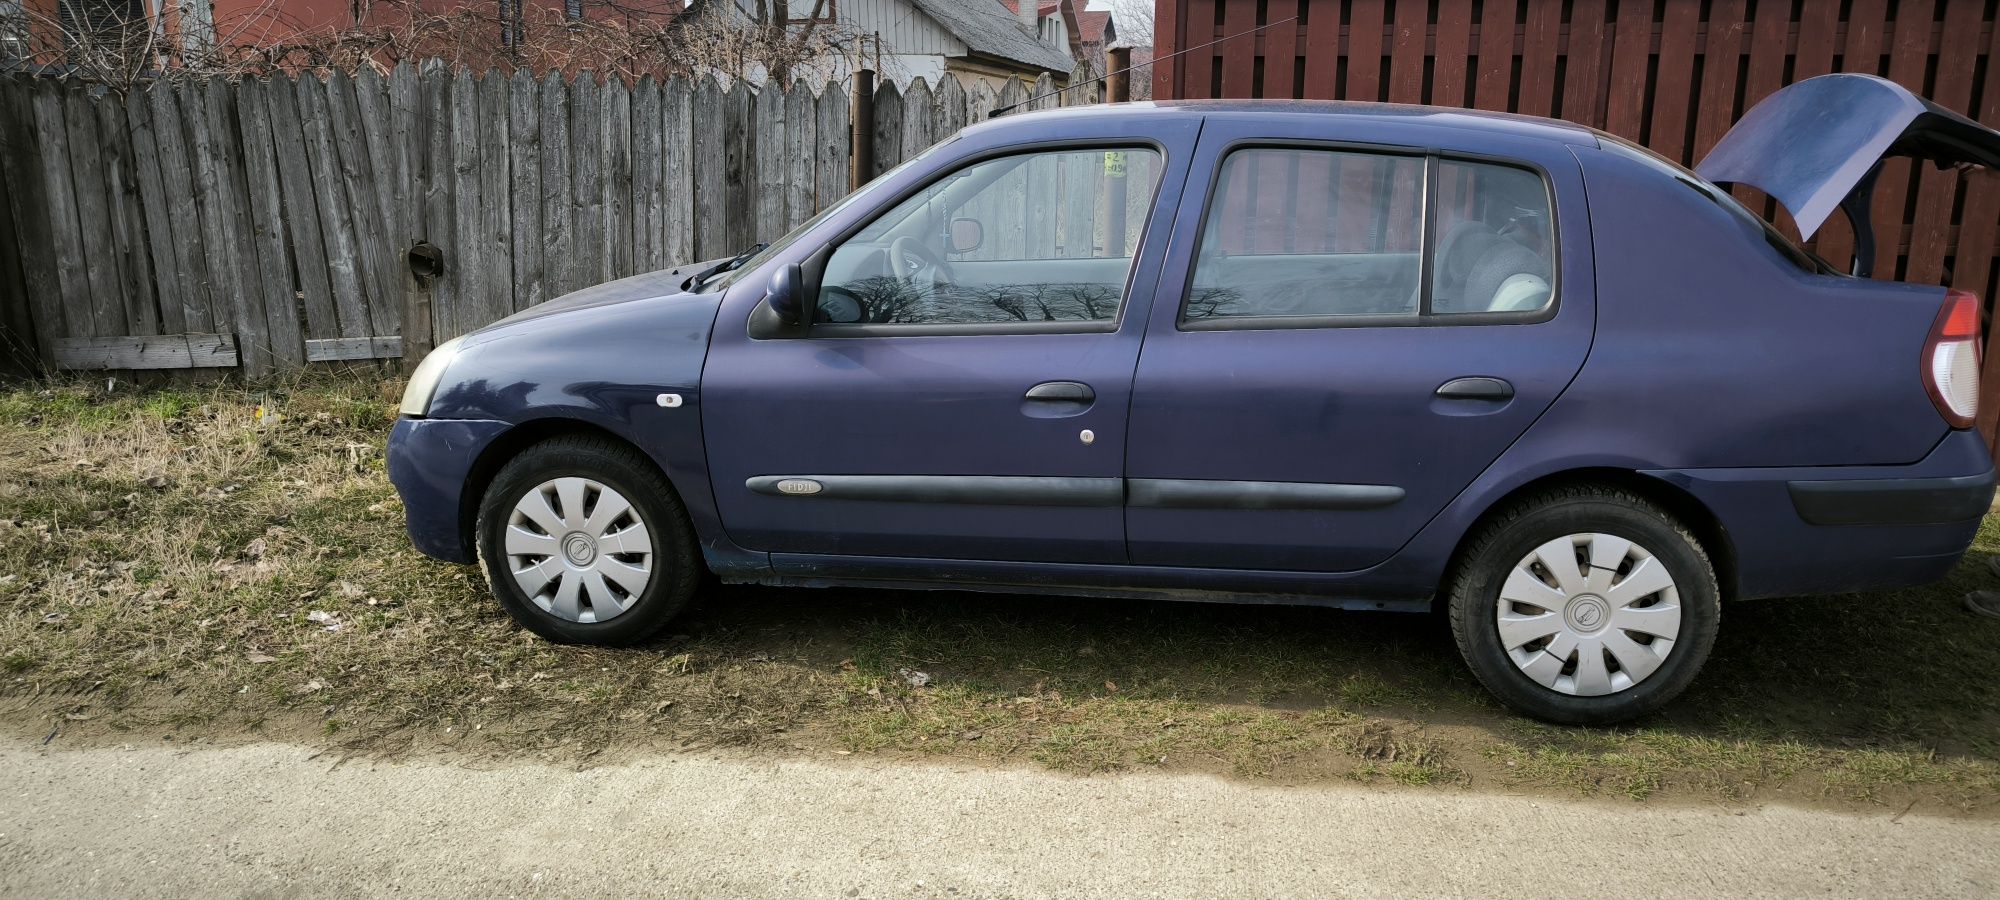 Renault Clio 1.4 benzina